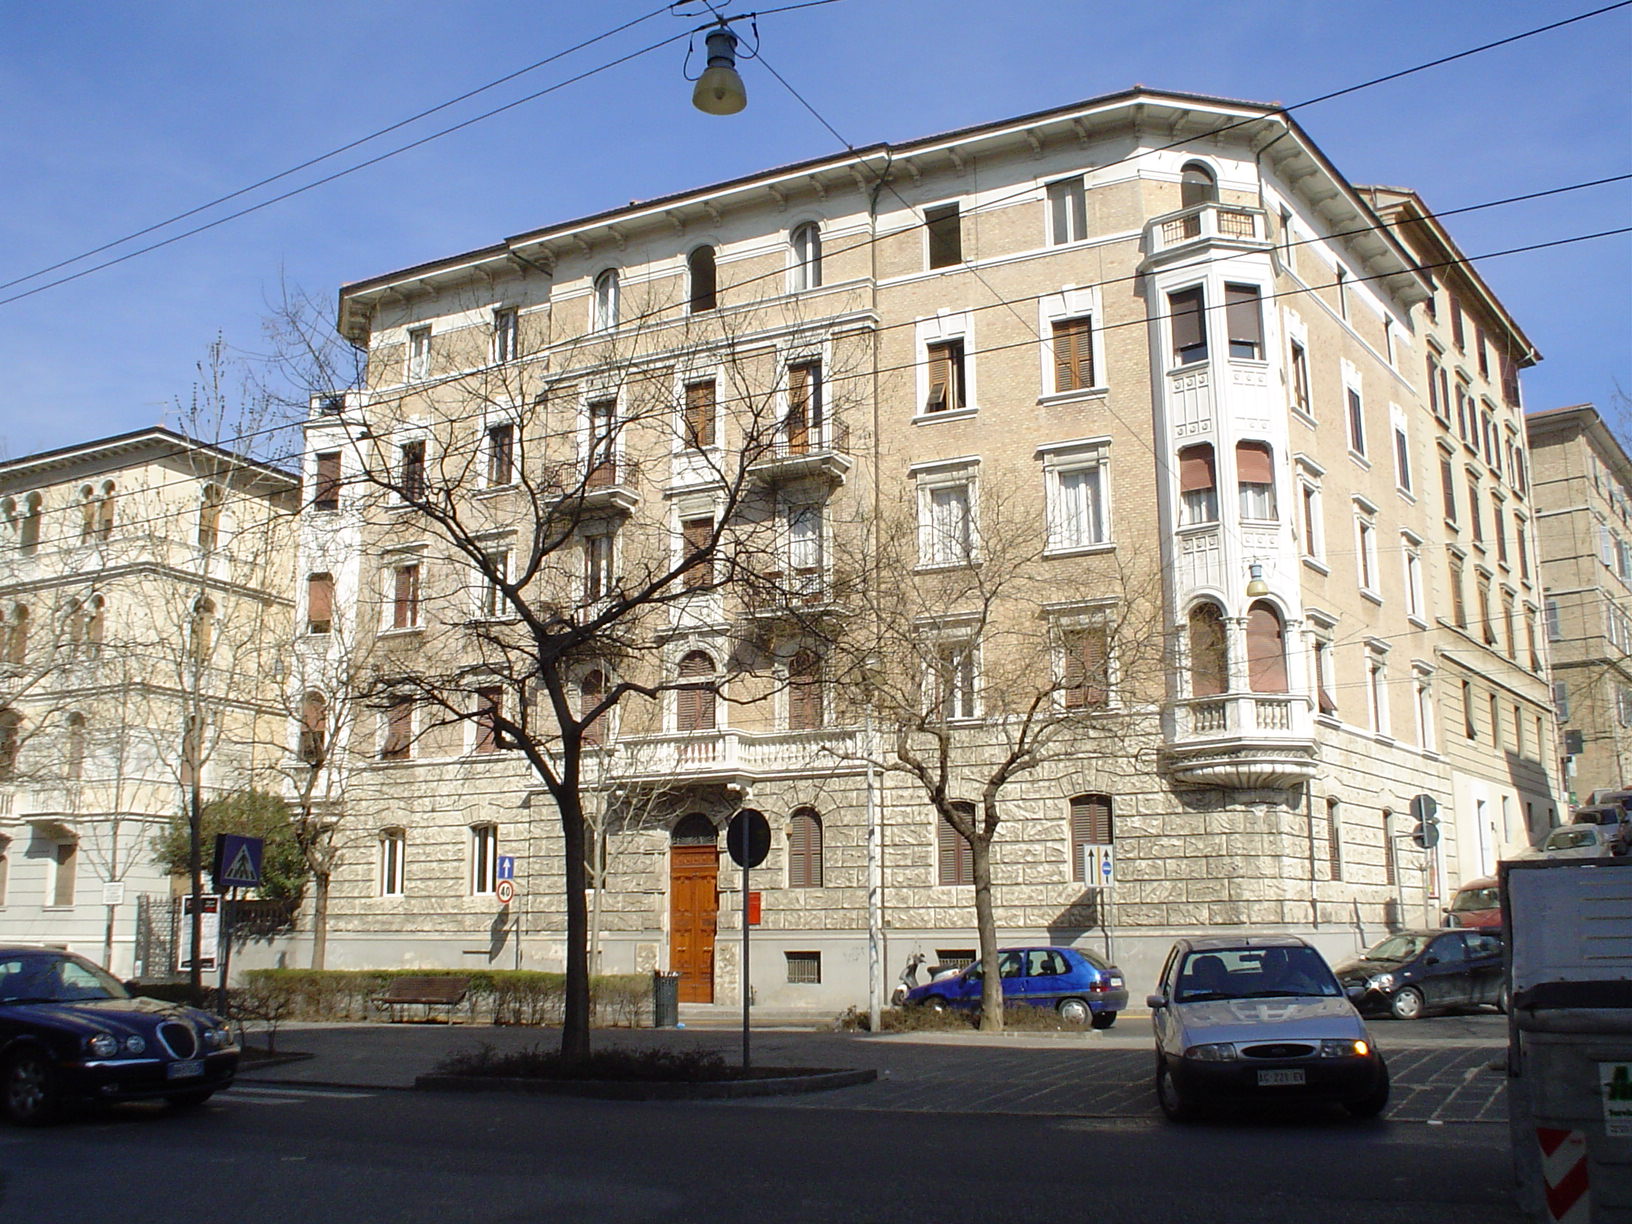 Palazzo in stile liberty (palazzo) - Ancona (AN) 